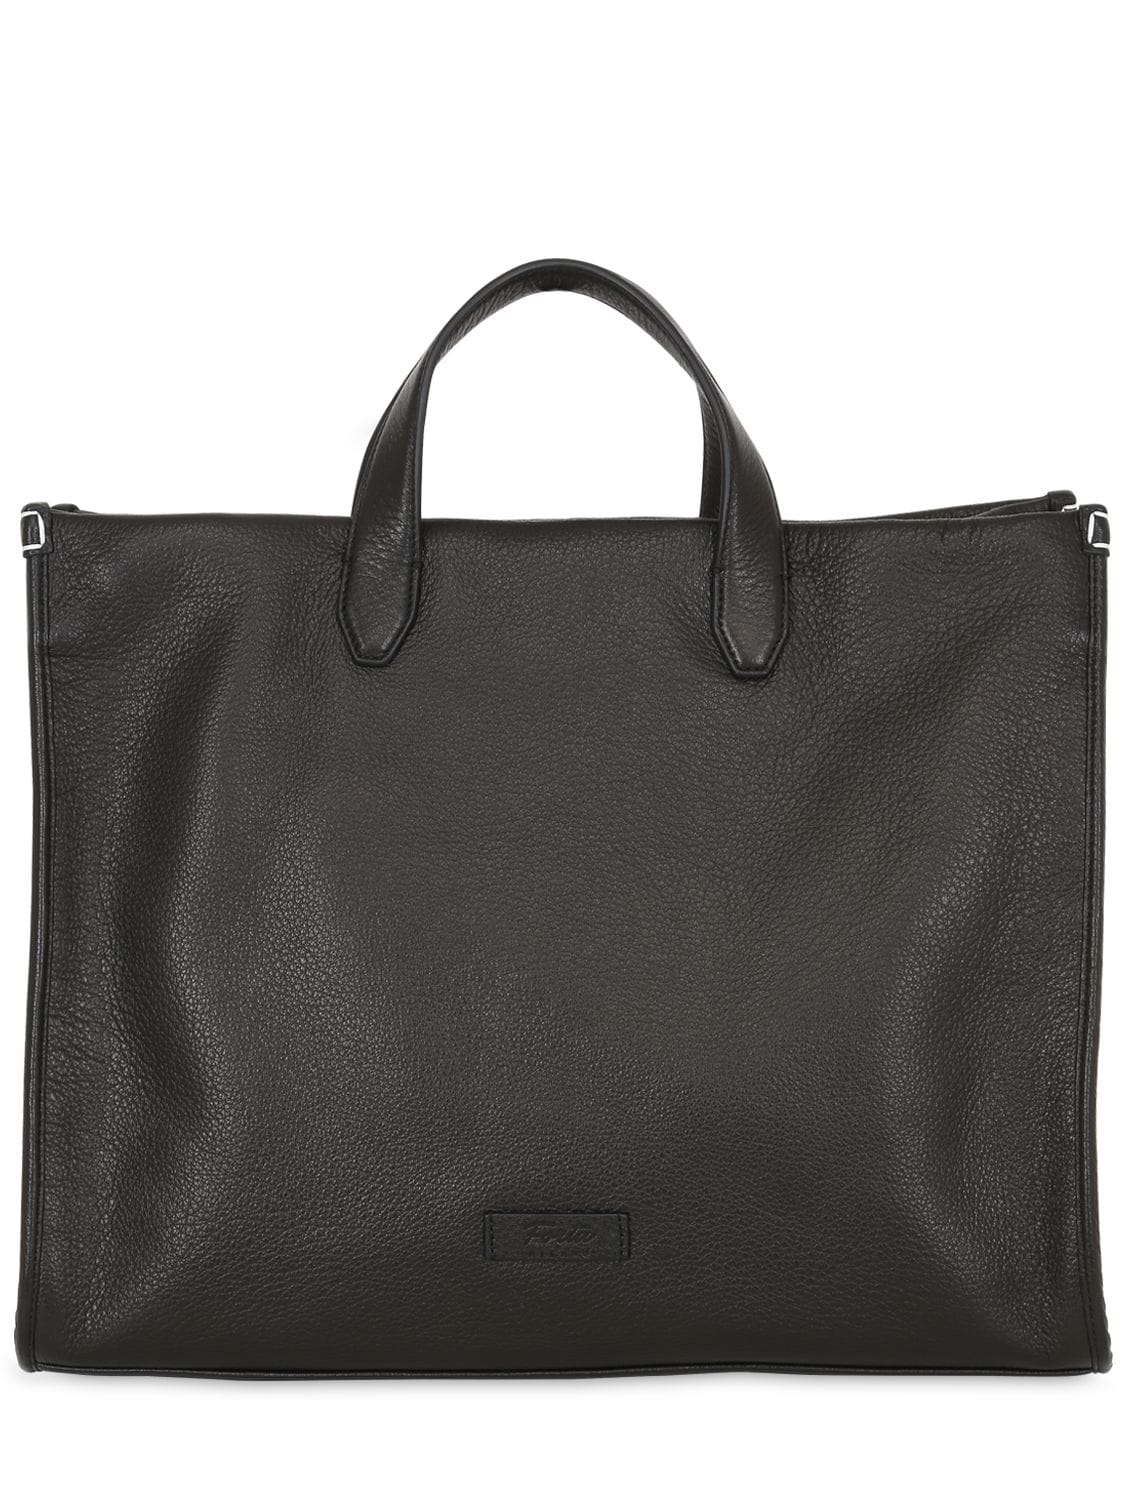 Fortu Milano Top Handle Leather Bag In Black Seagram